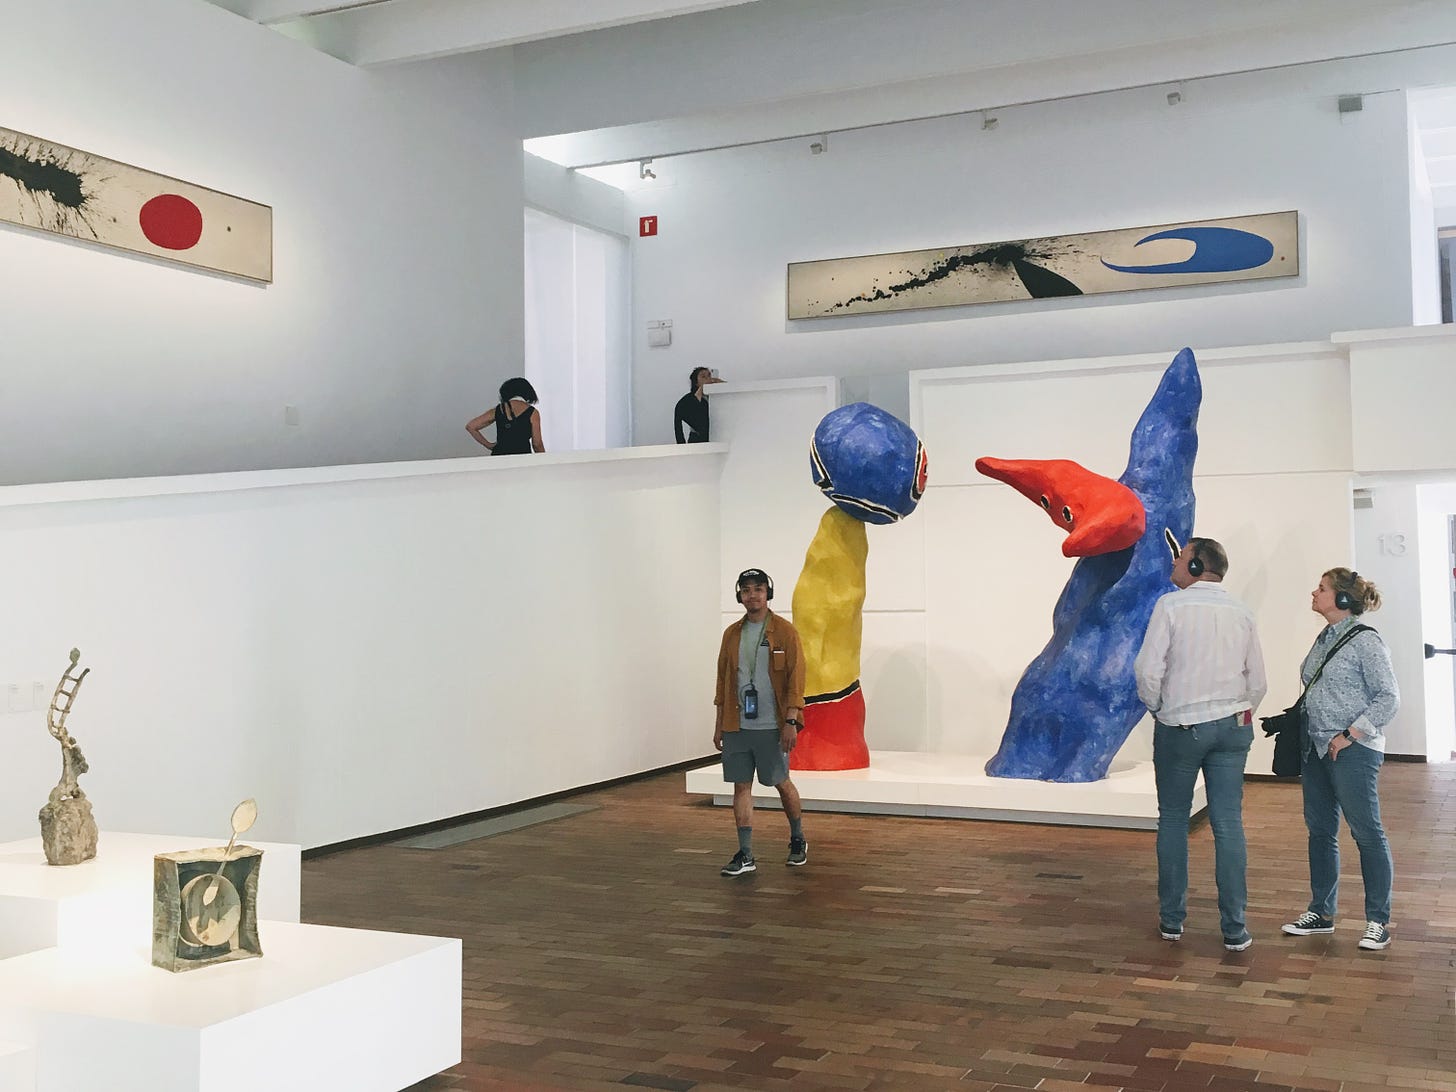 Miró sculptures